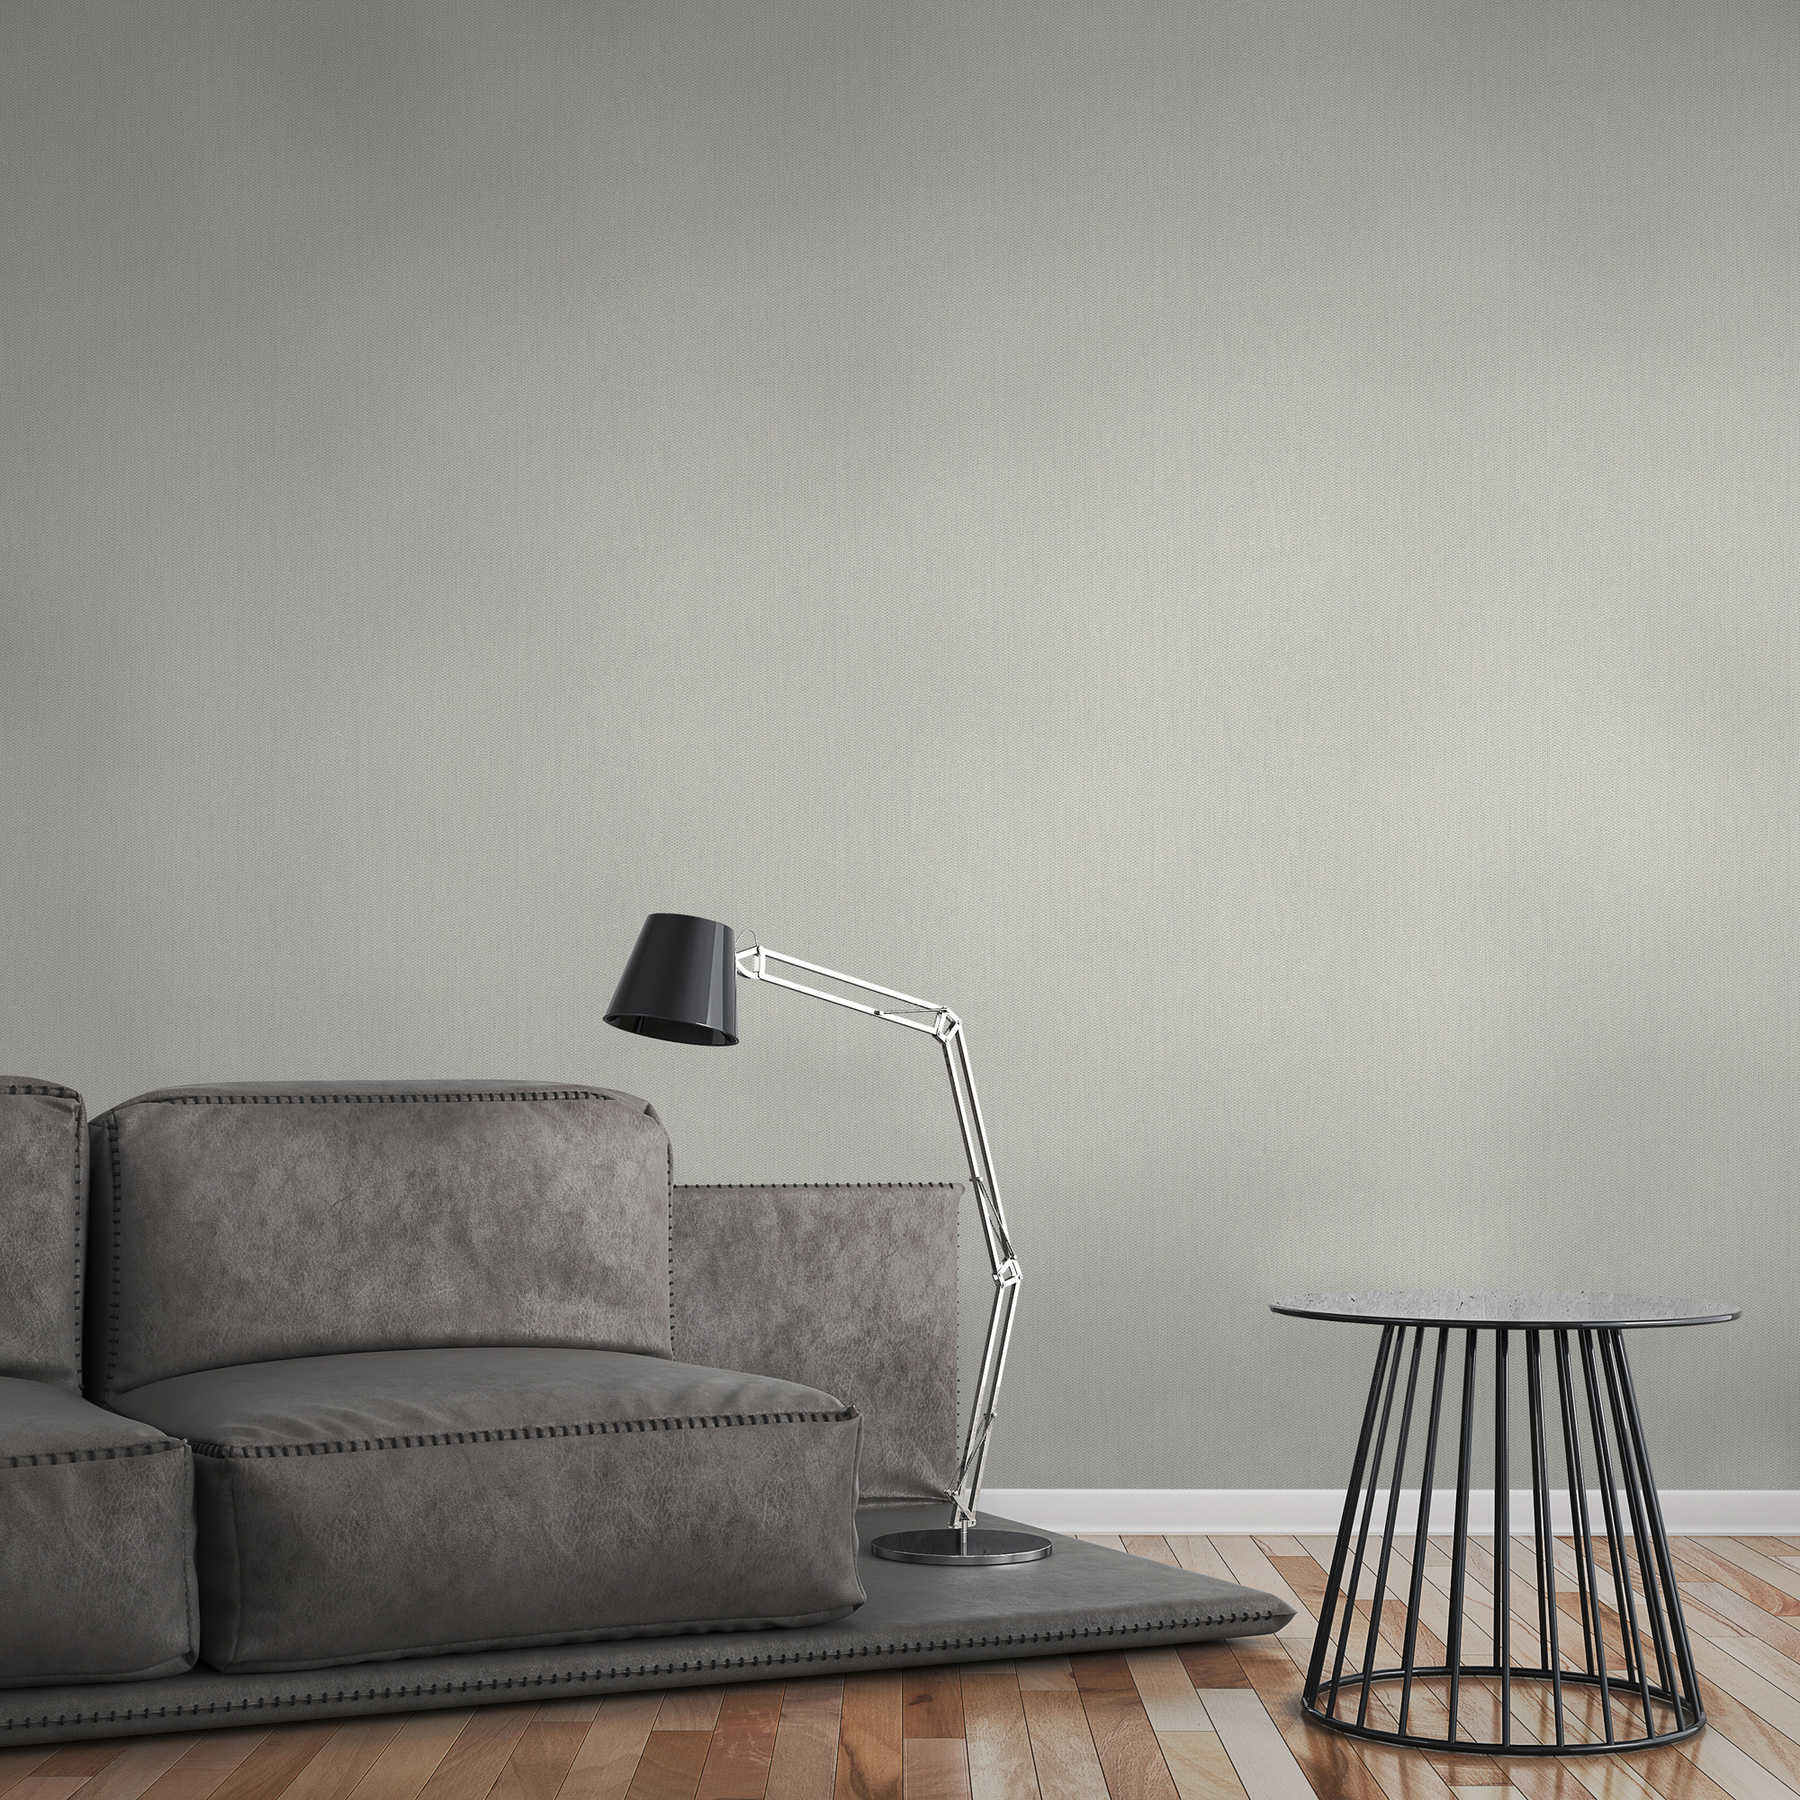             Textile texture & metallic effect wallpaper - grey
        